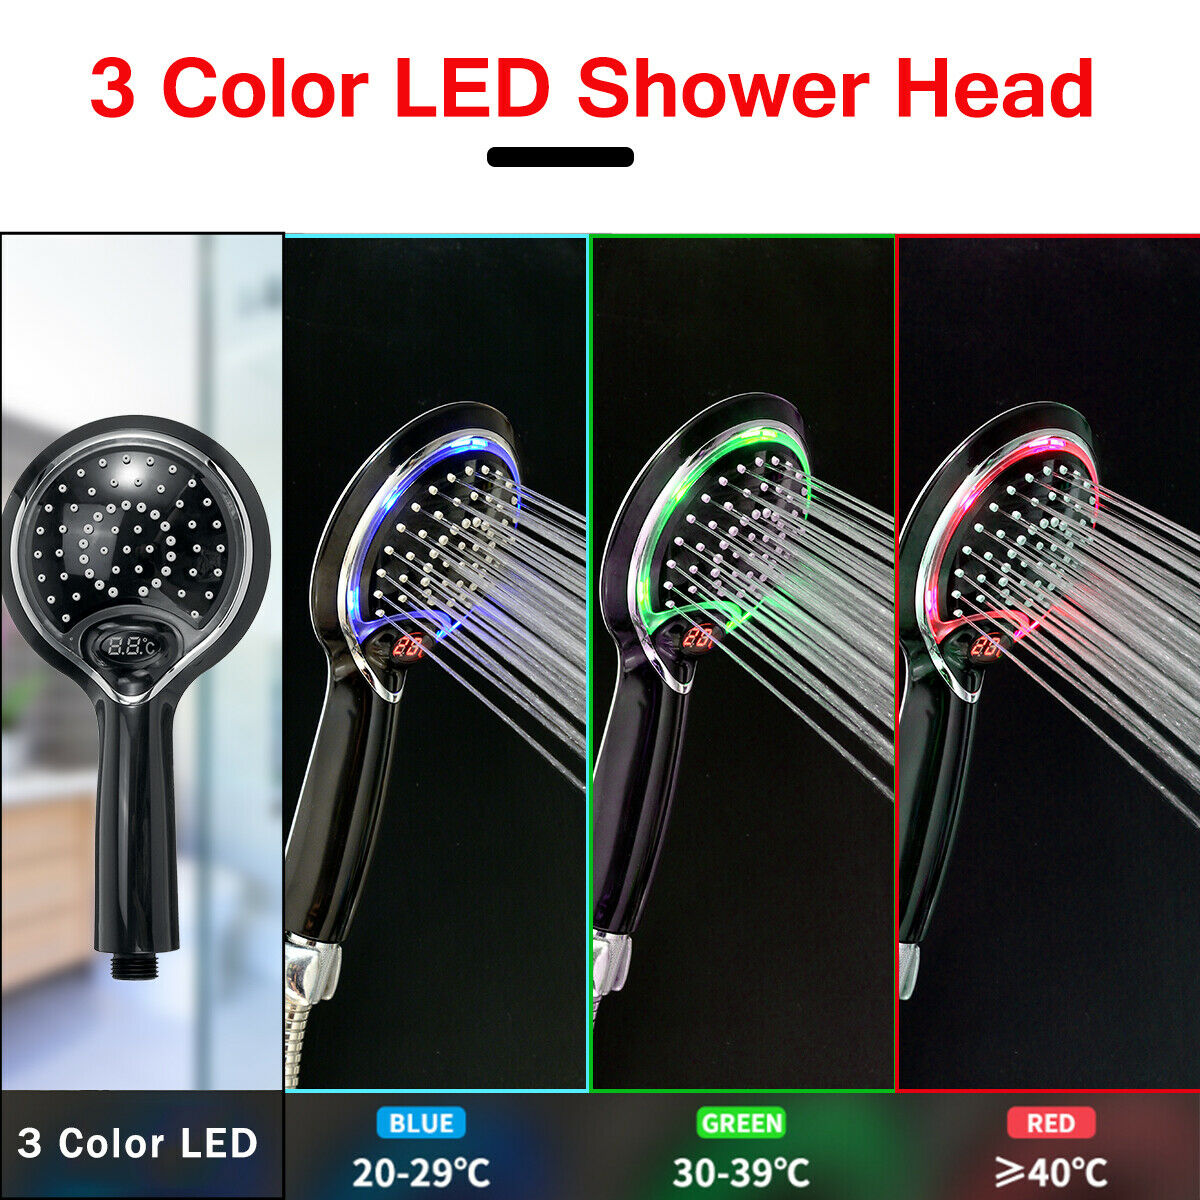 3 Color LED Shower  Home Digital LCD Display Temperature Control Shower  Sï¼ â˜ª